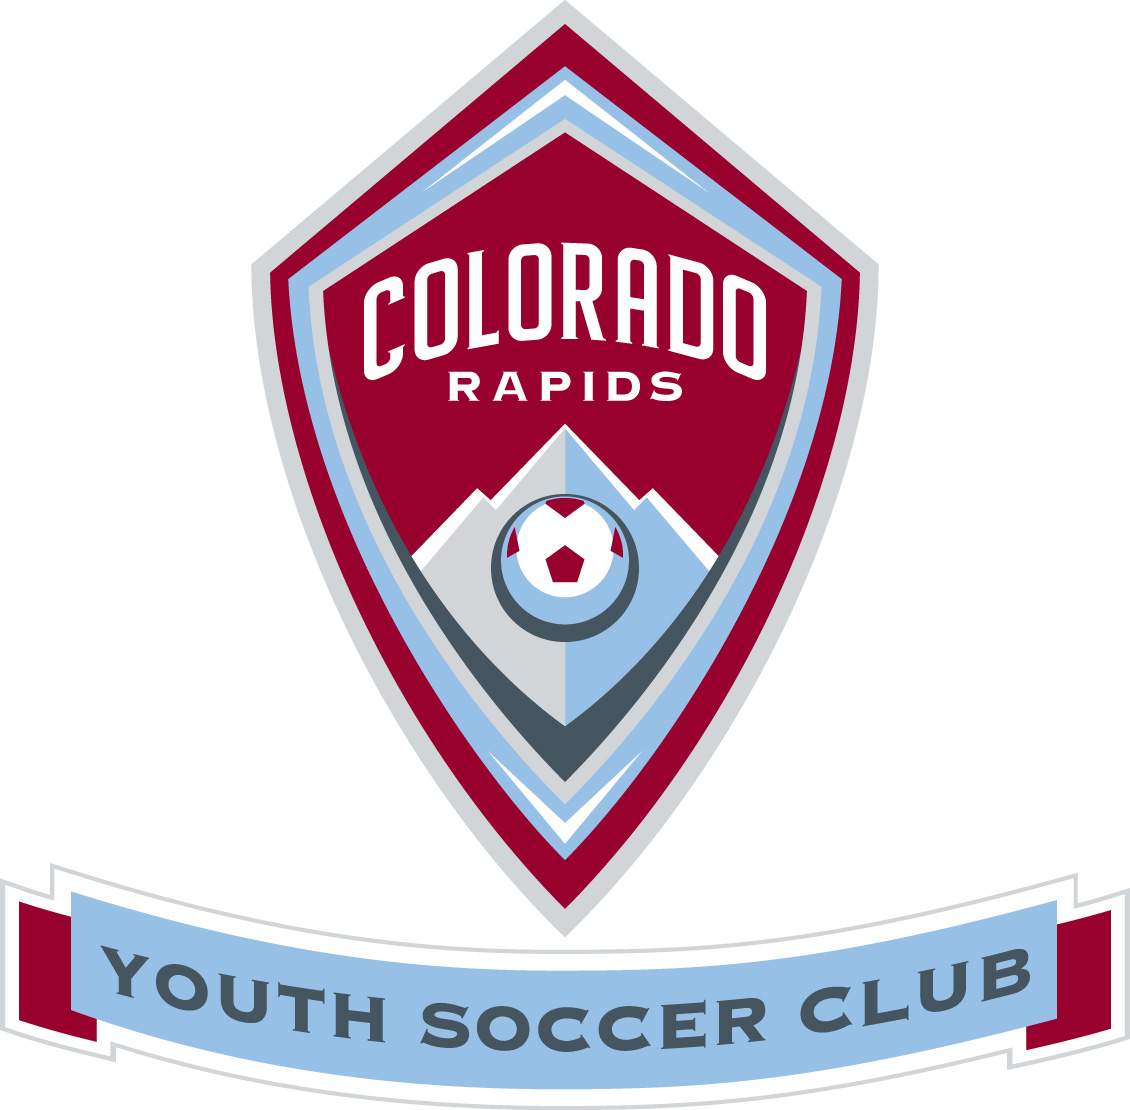 Colorado Rapids Youth Soccer Club Central team badge